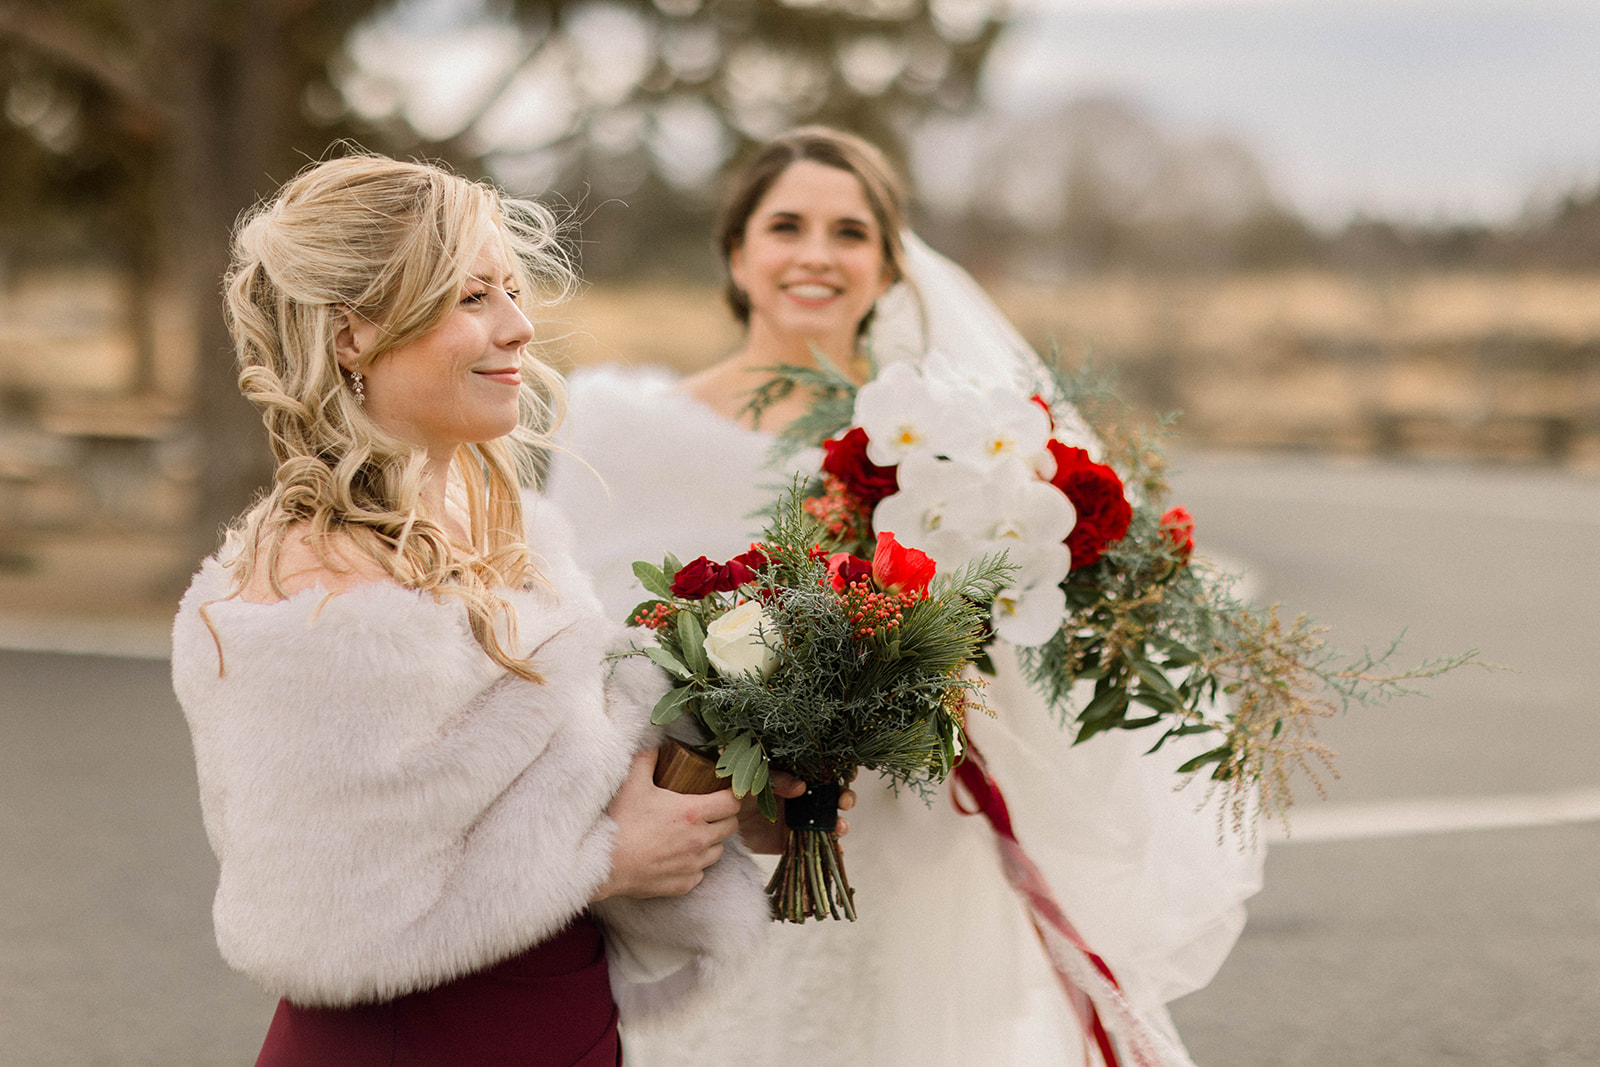 Intimate Winter Wedding at Sunriver Resort Oregon by Adam and Becca Photo & Video